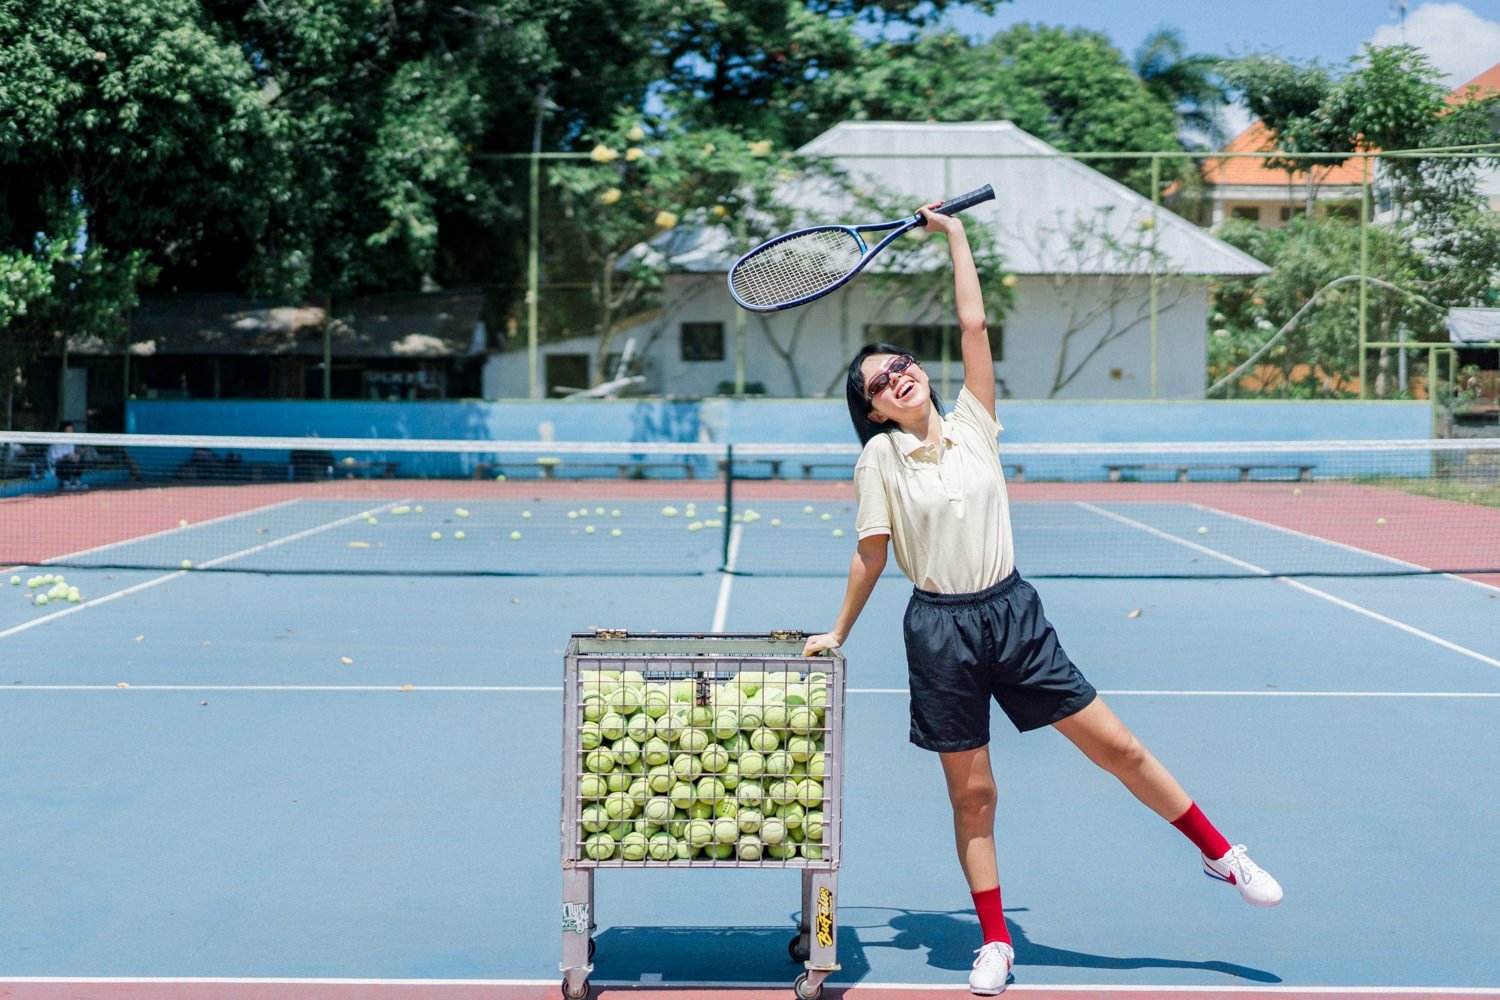 Amazing portrait photo in tennis court